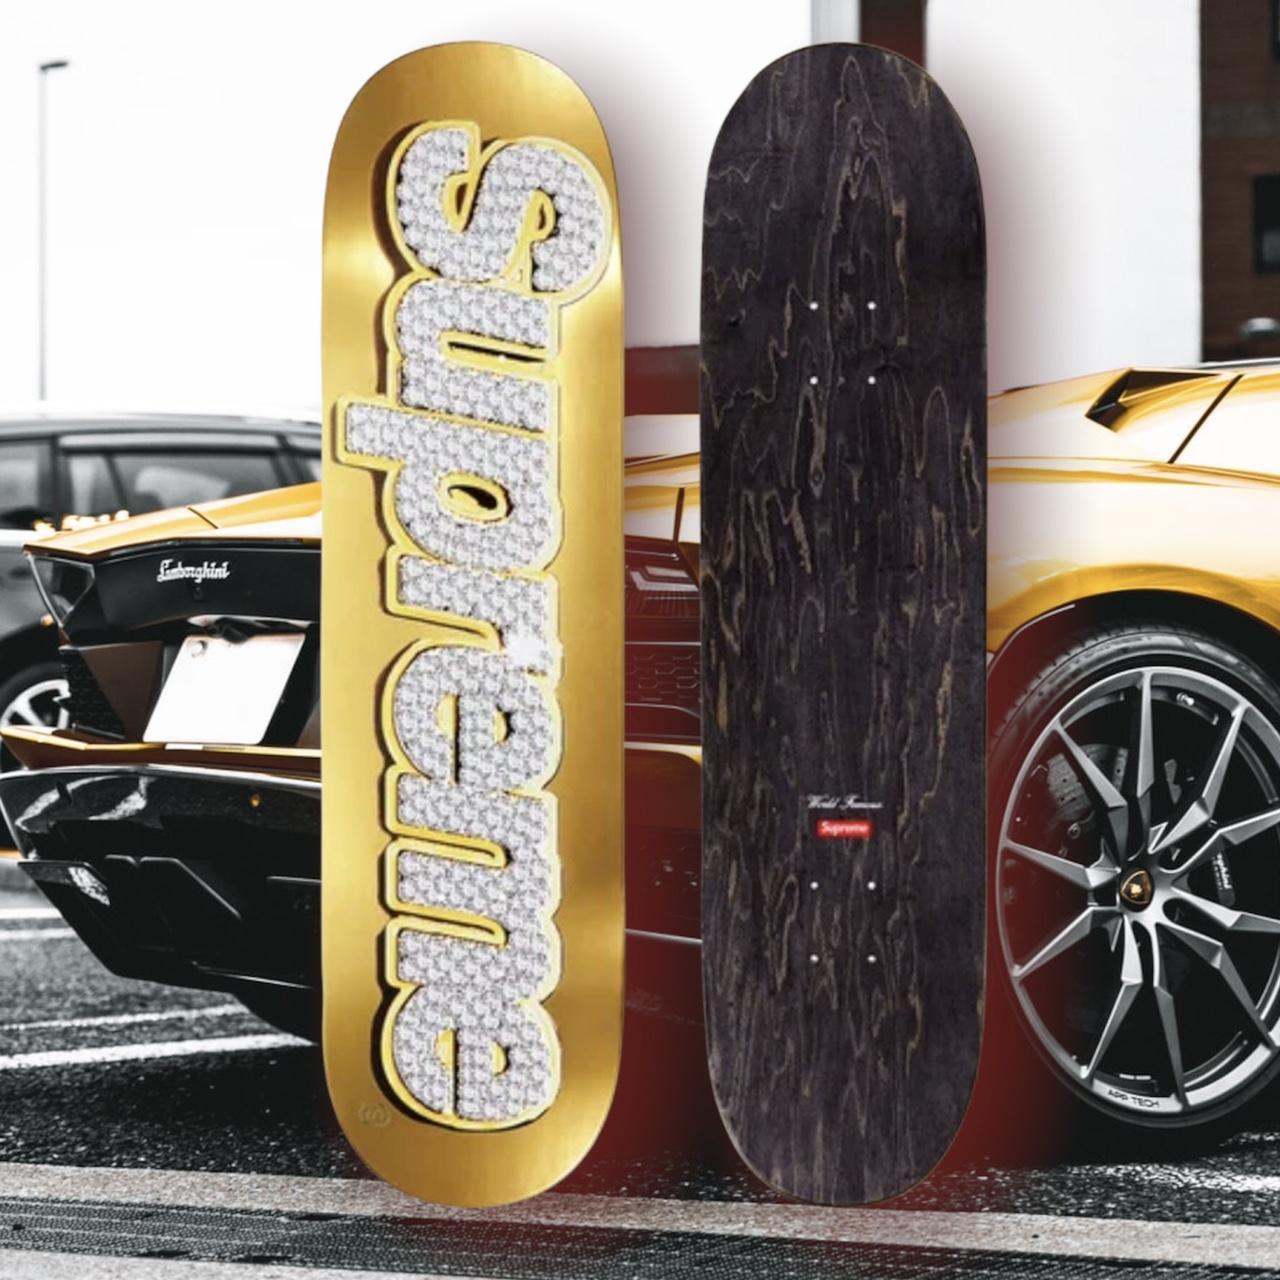 Supreme Bling Box Logo Skateboard